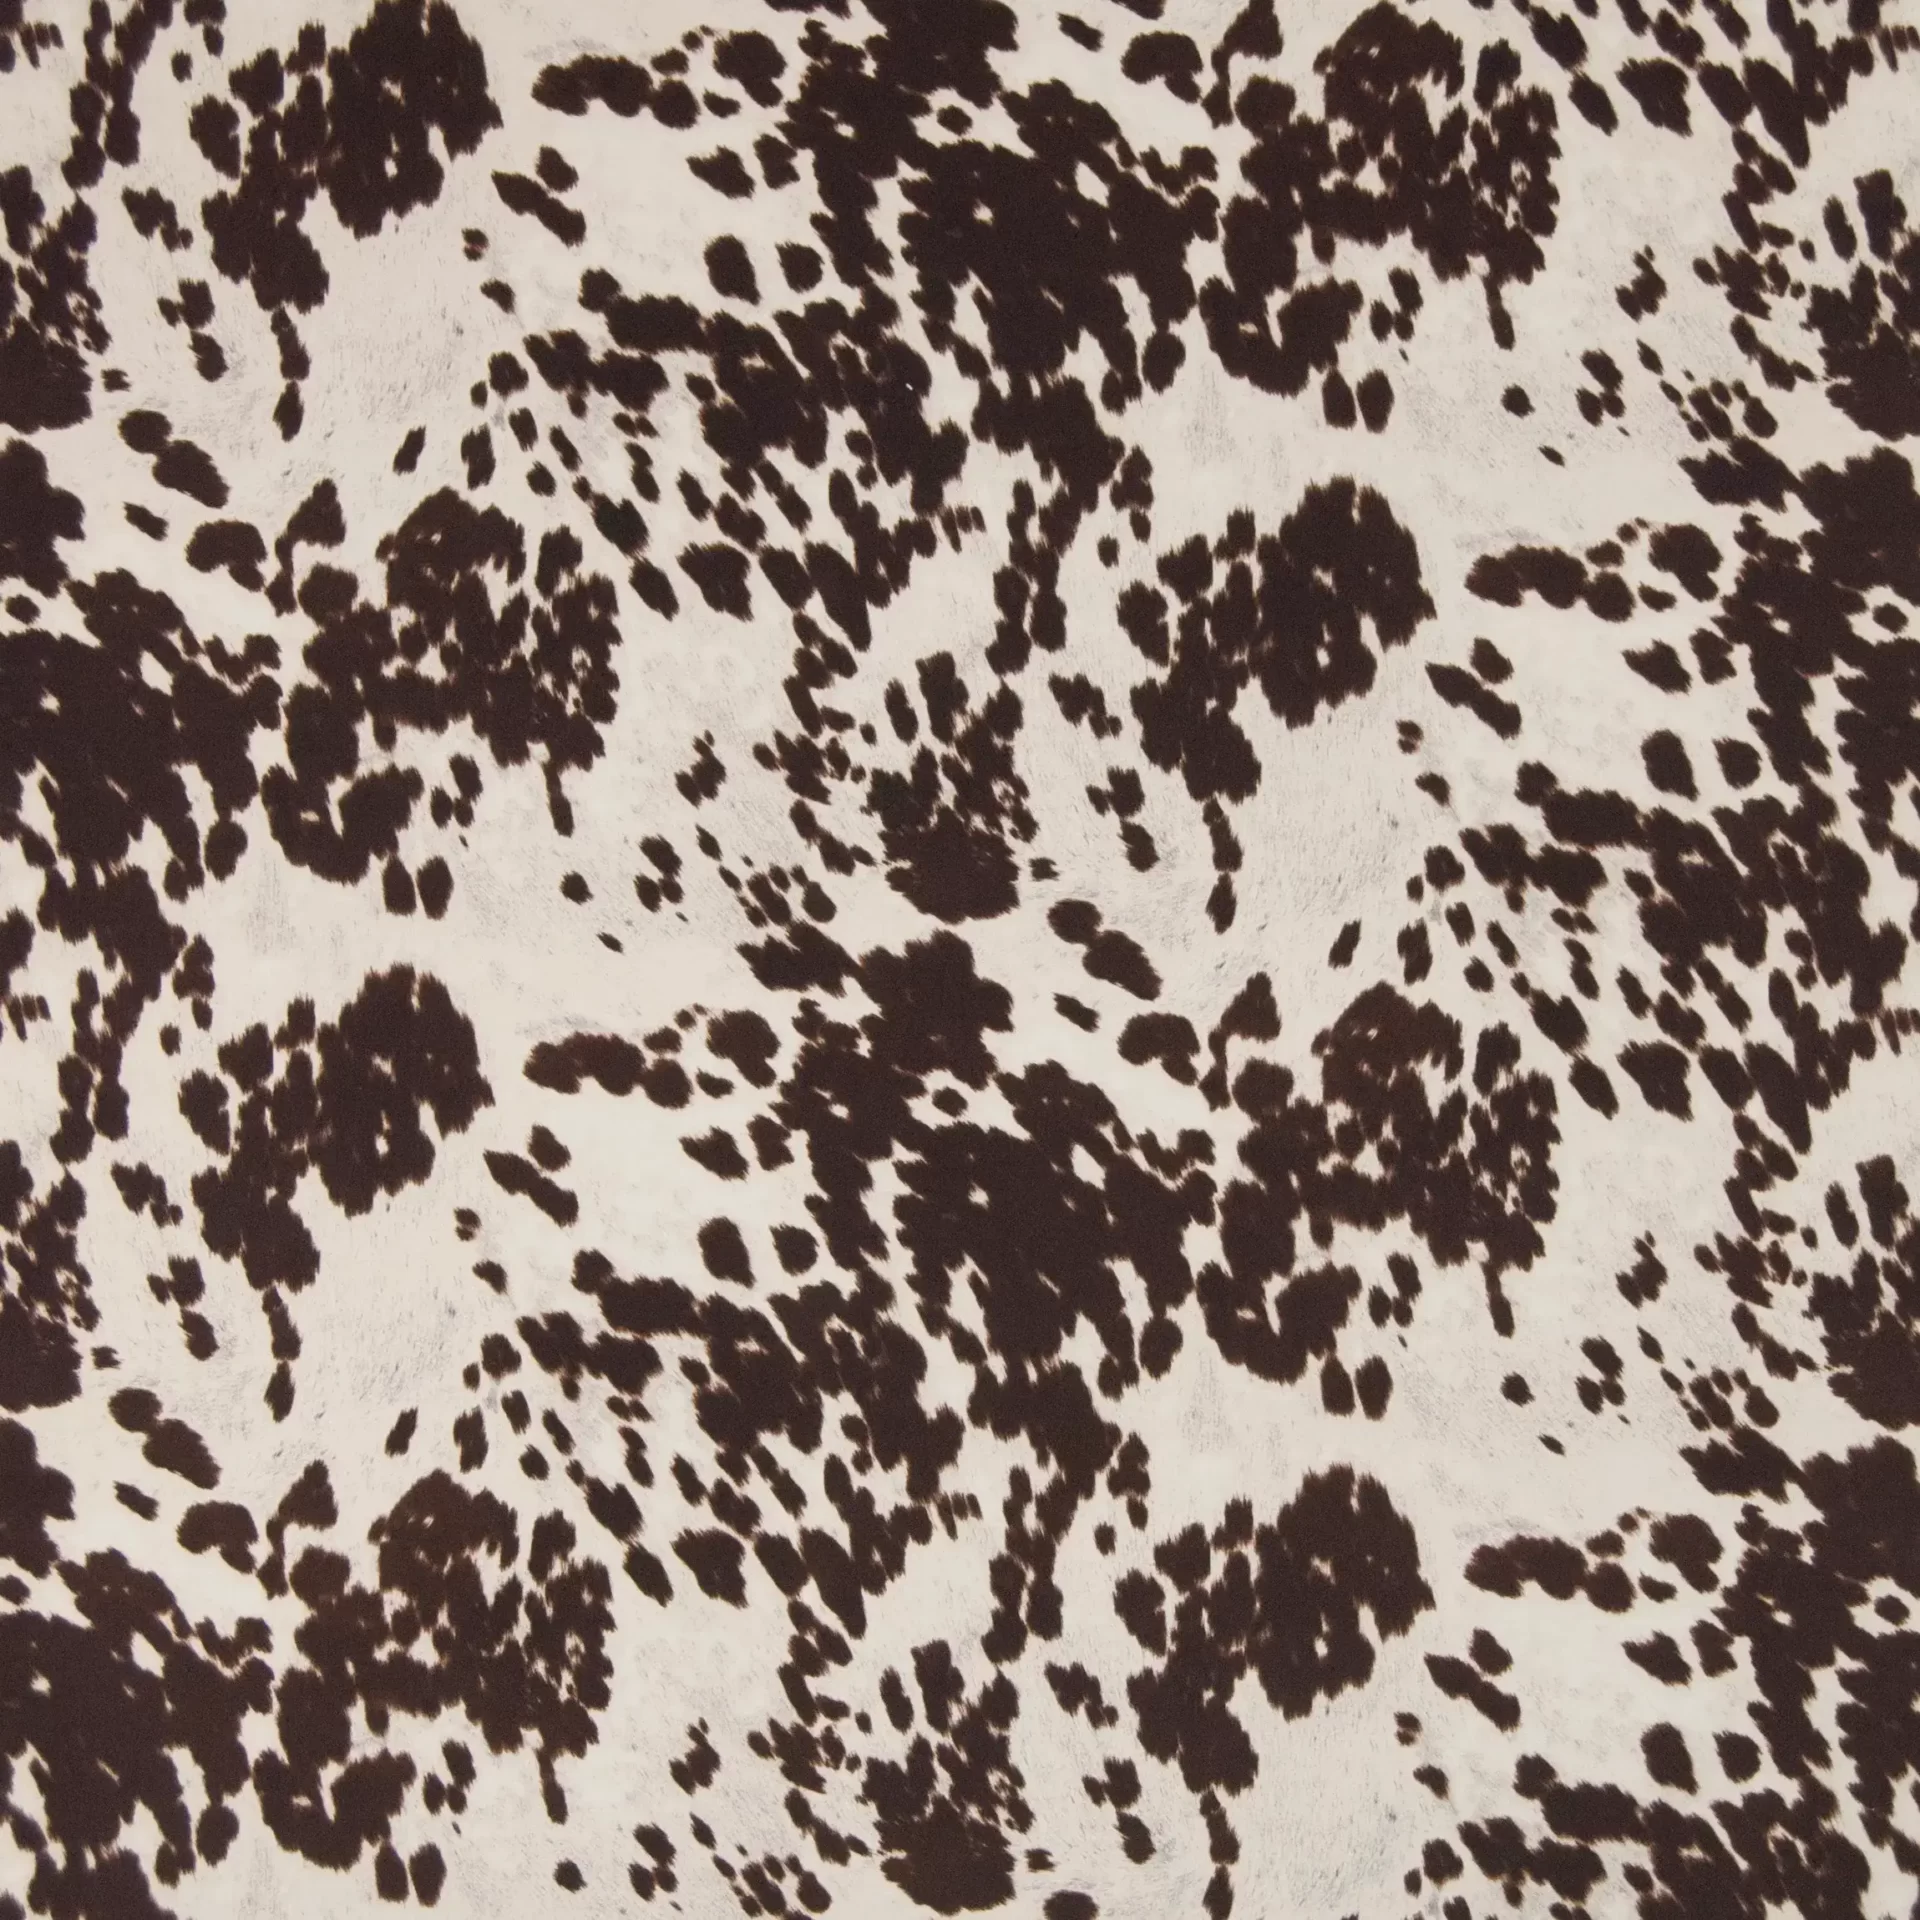 Cow Grain by Warwick Fabrics. Cow Print Upholstery Fabric.